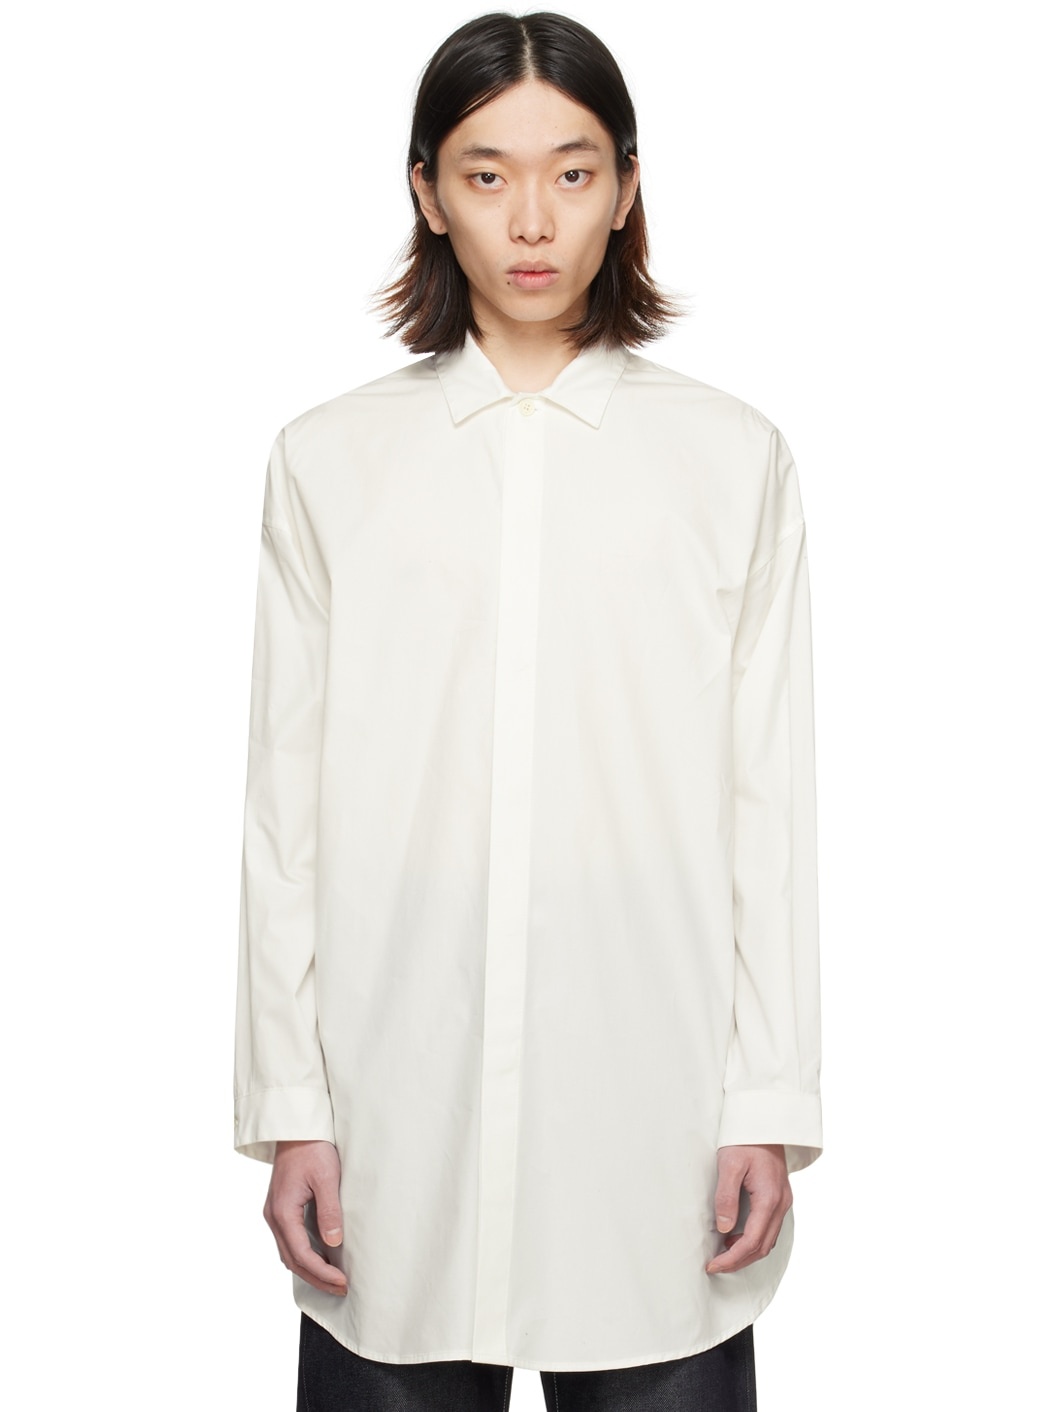 Off-White Spread Collar Shirt - 1